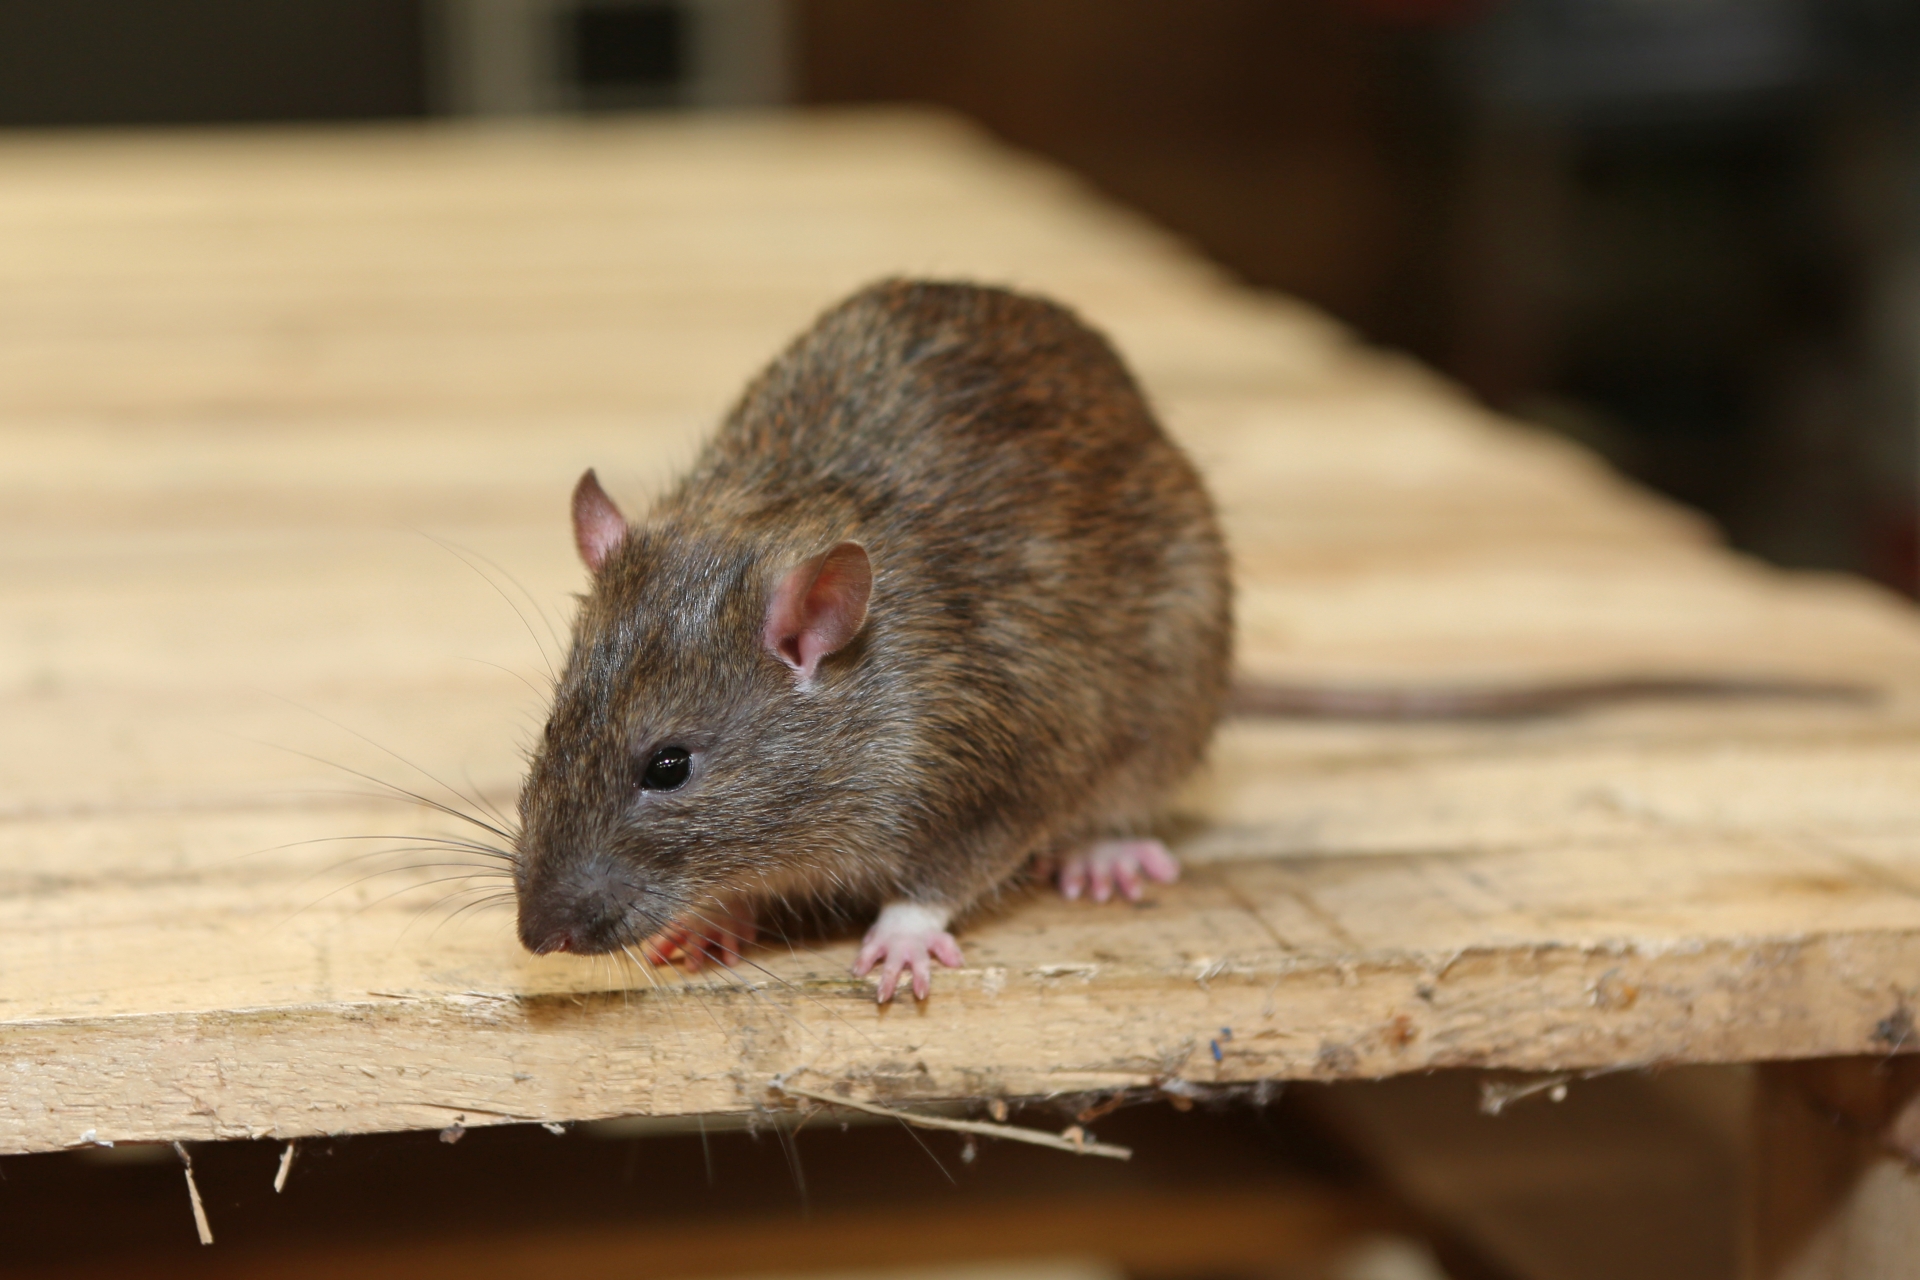 Rat extermination, Pest Control in Epsom, Horton, Longmead, KT19. Call Now 020 8166 9746